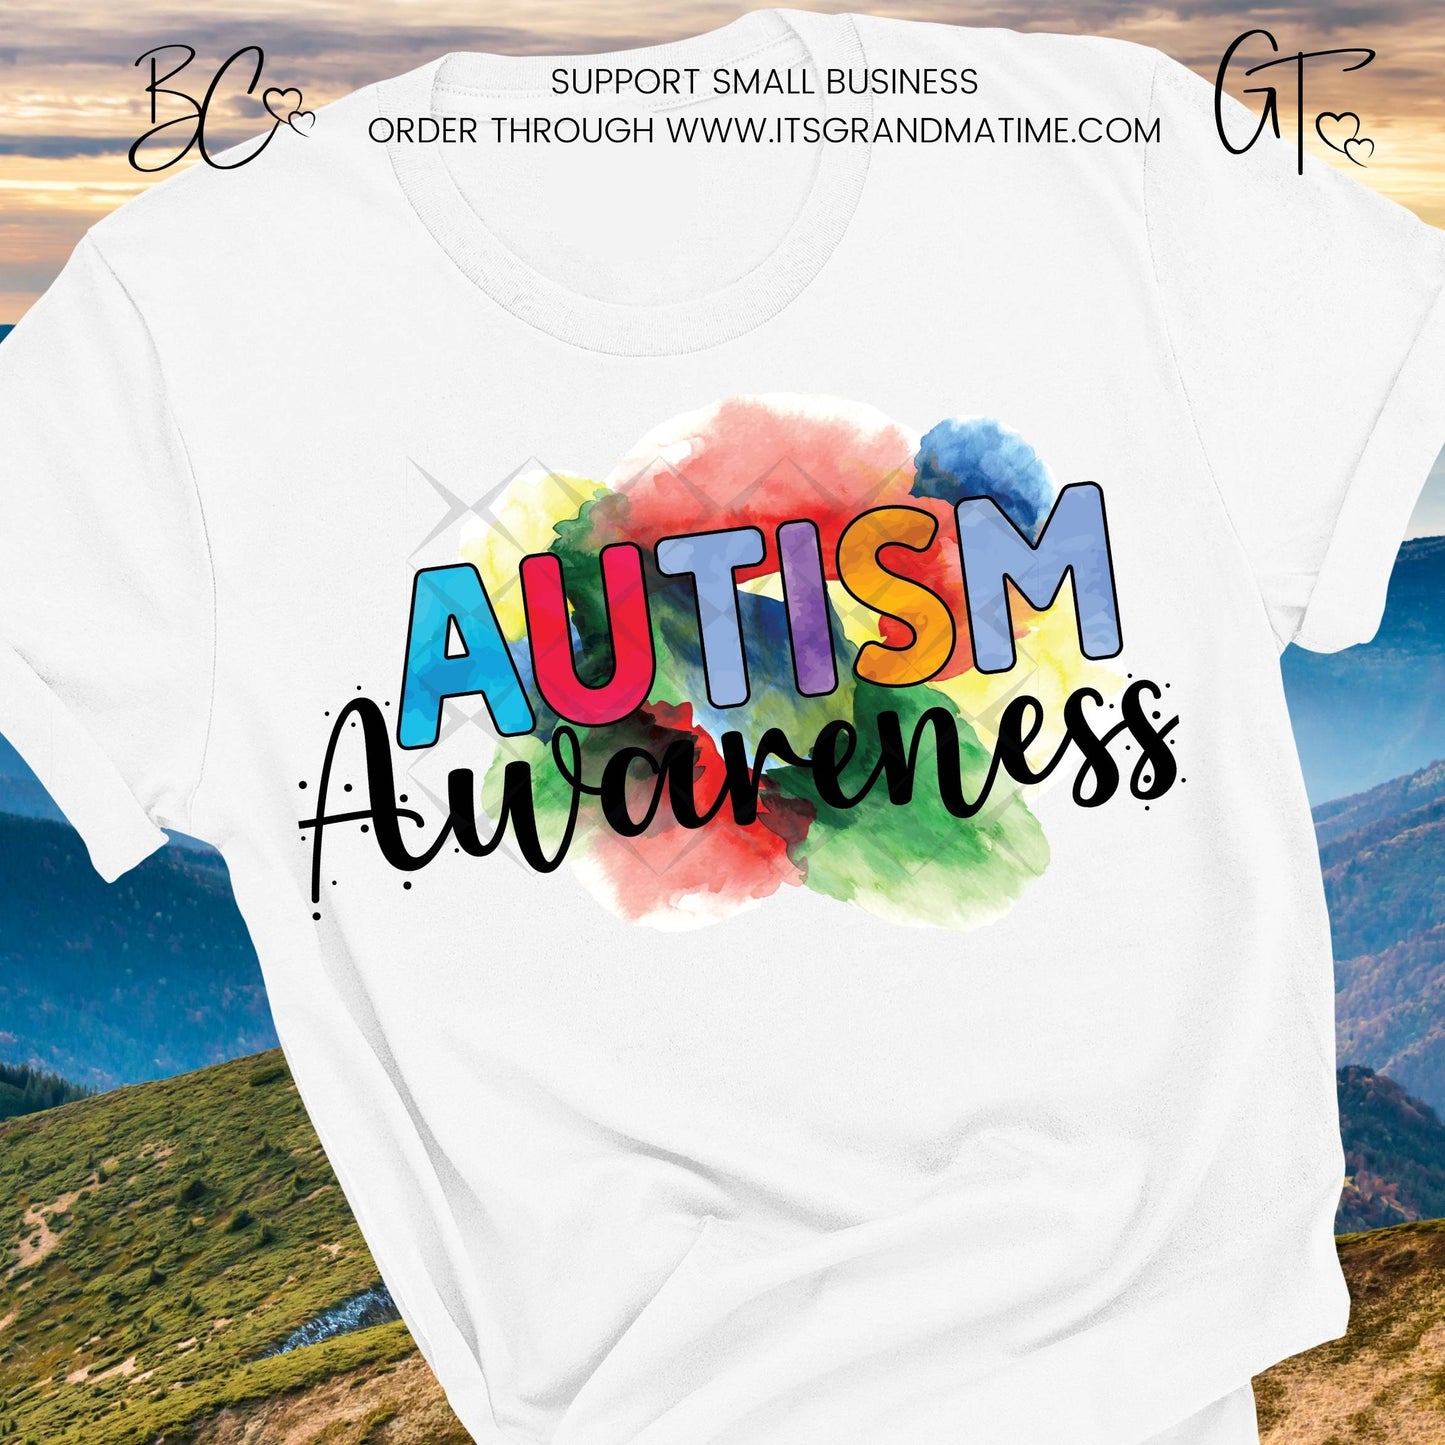 SUB429 Autism Awareness Autism Sublimation Transfer